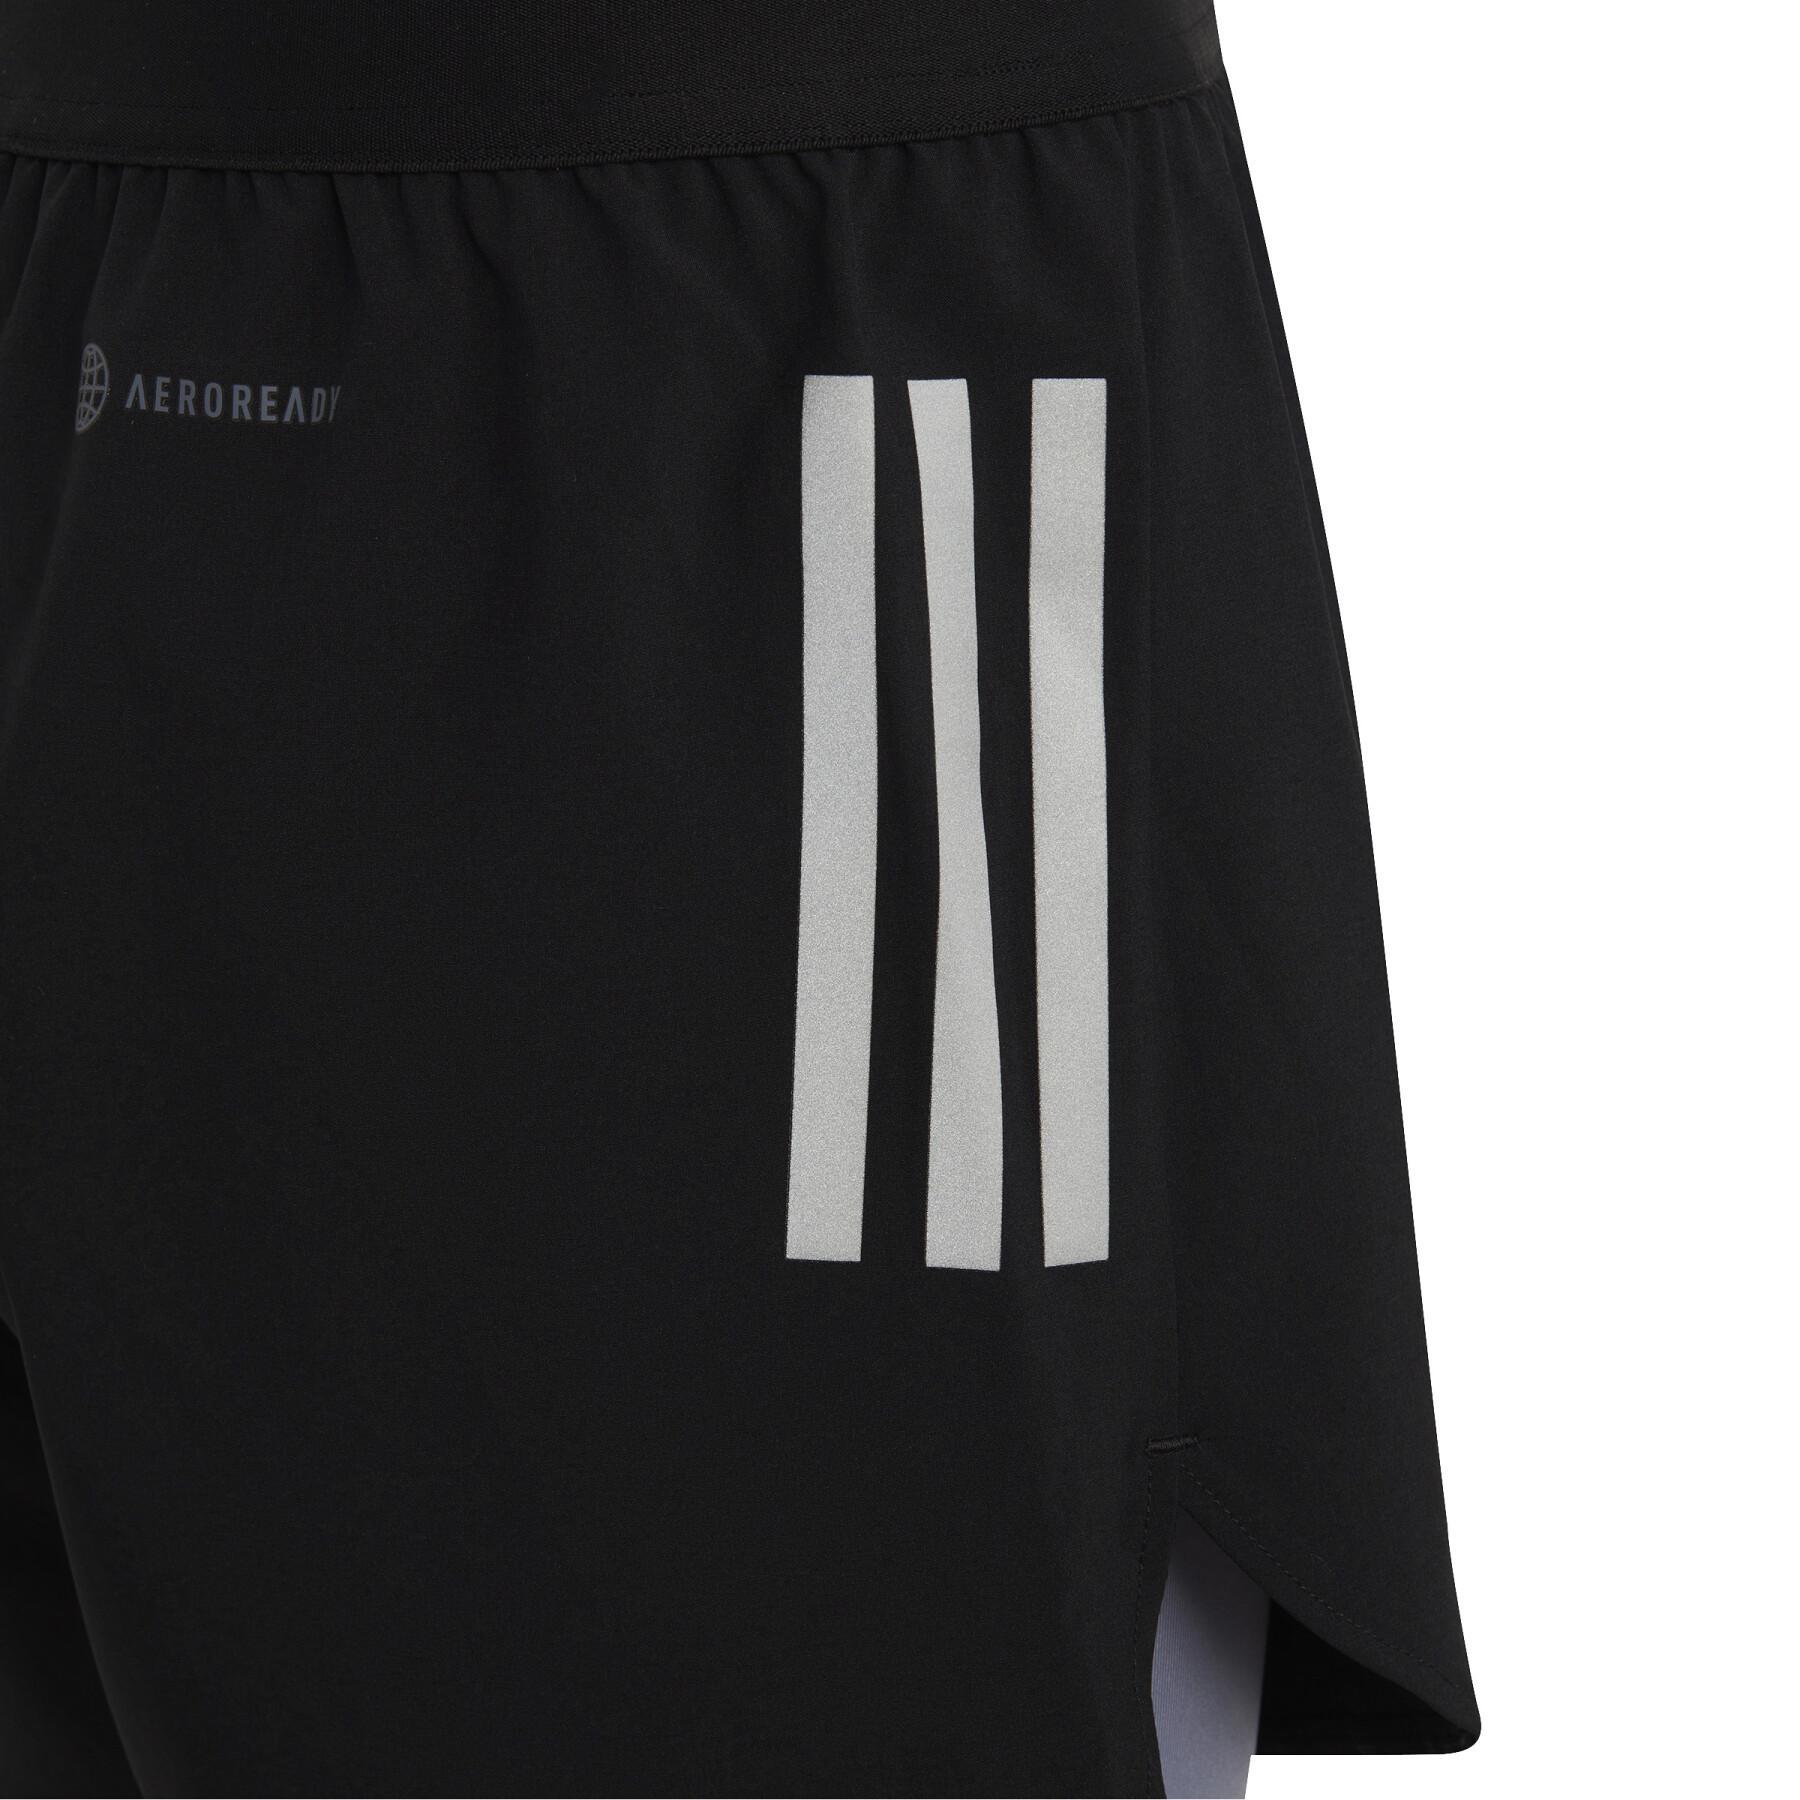 2 in 1 woven shorts for girls adidas Aeroready